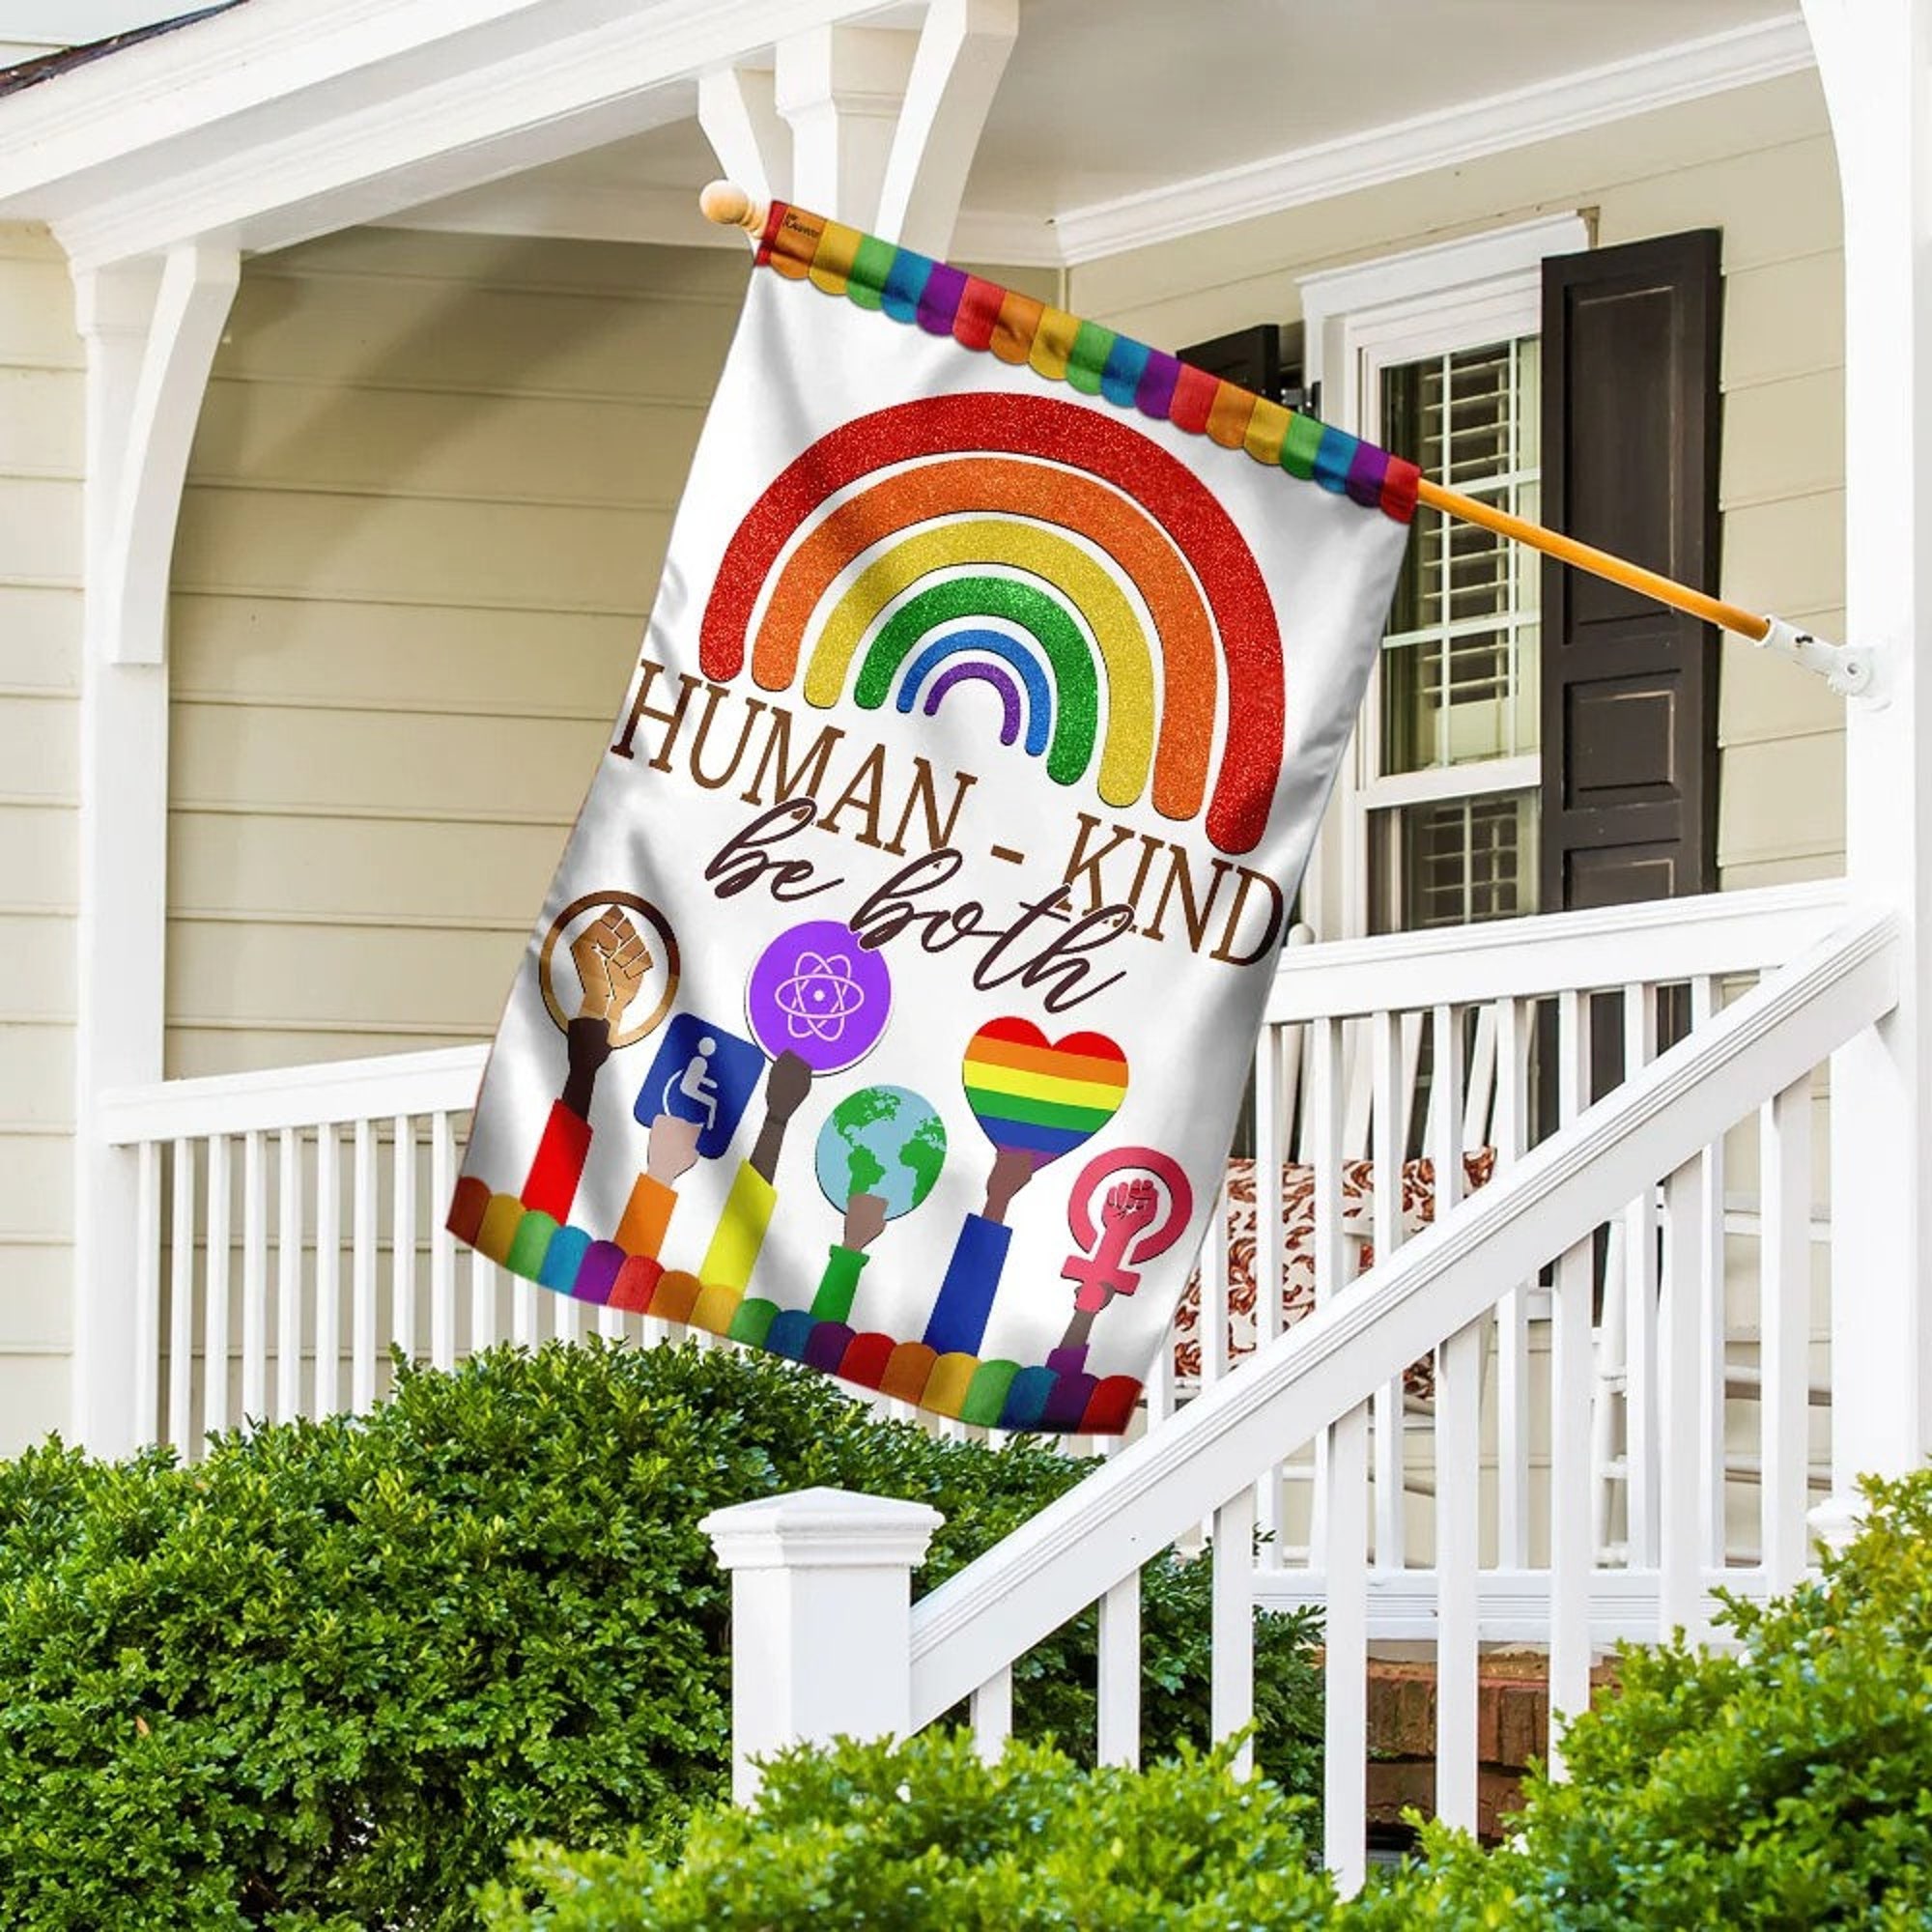 Human Kind Be Both LGBT Pride House Flag